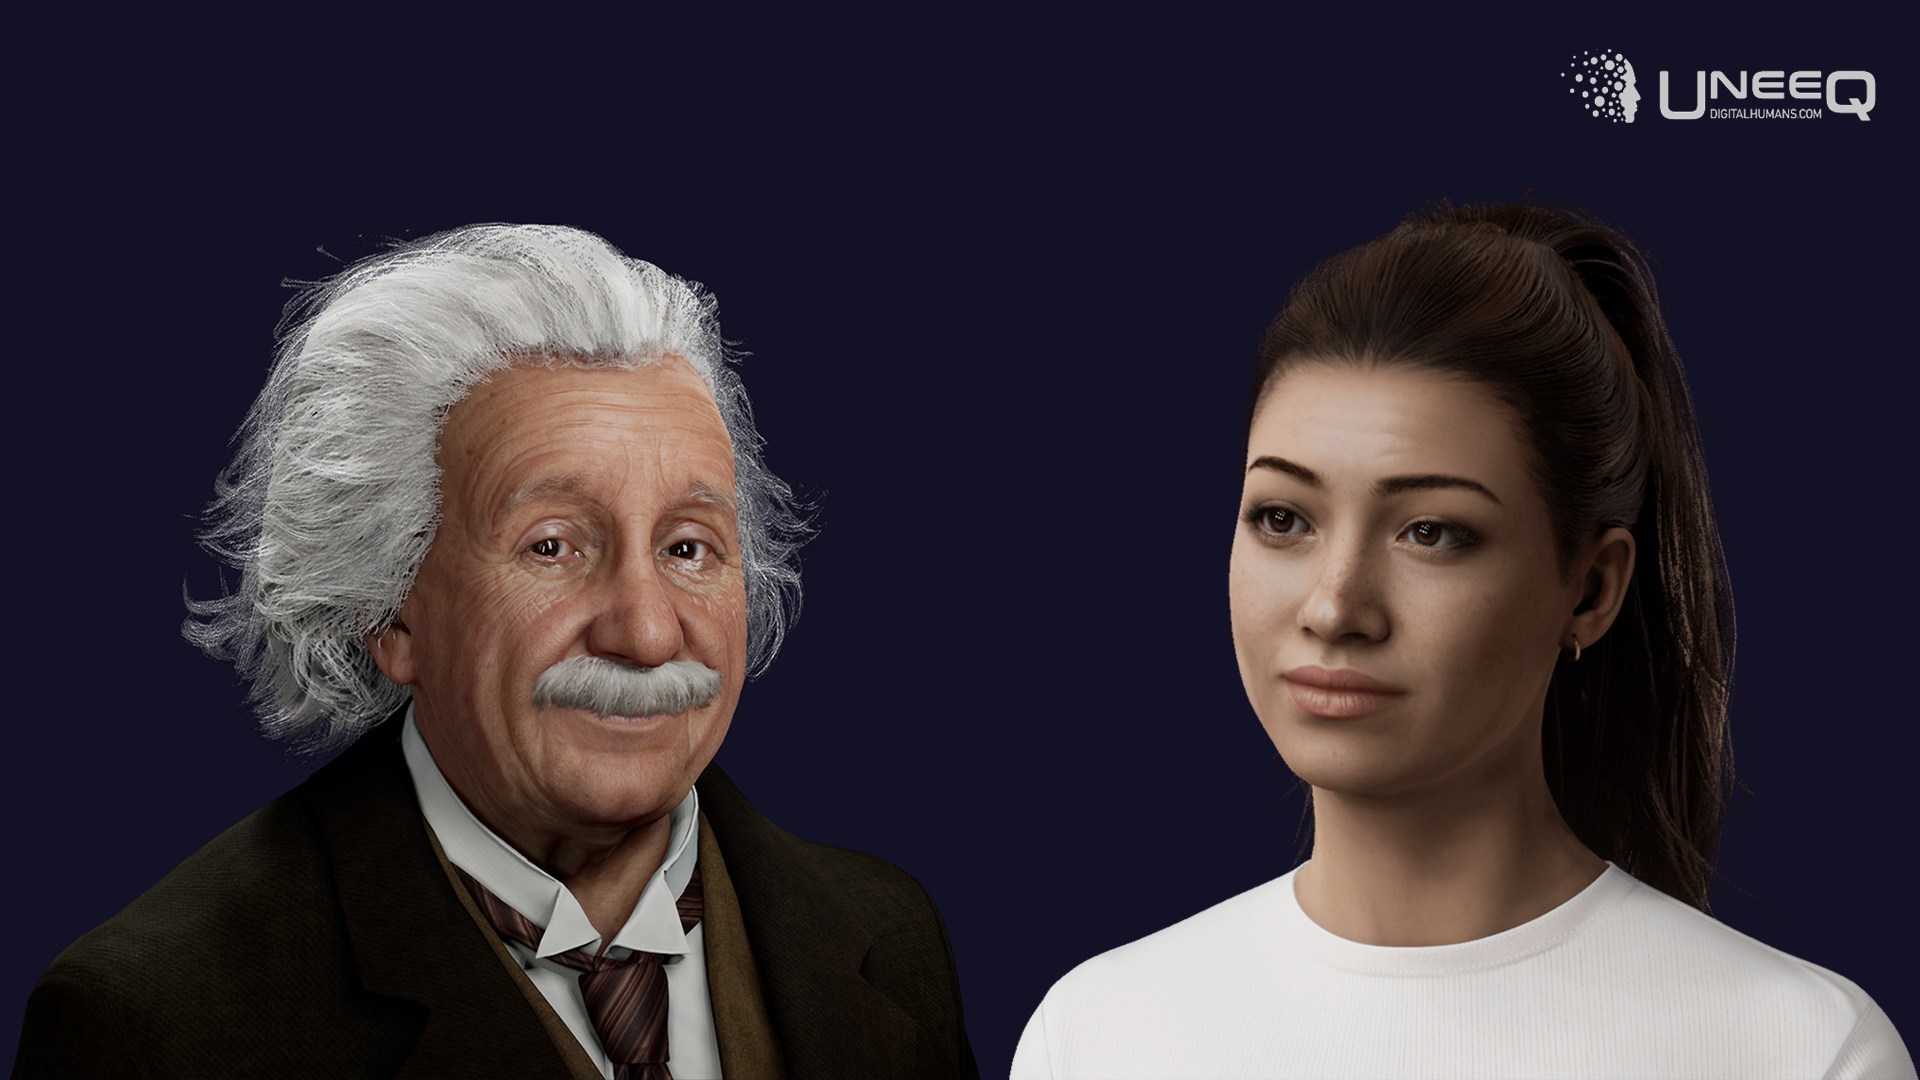 UneeQ社のDigital Einsteinの特徴を解説｜最新デジタルヒューマンを導入するメリットとは?